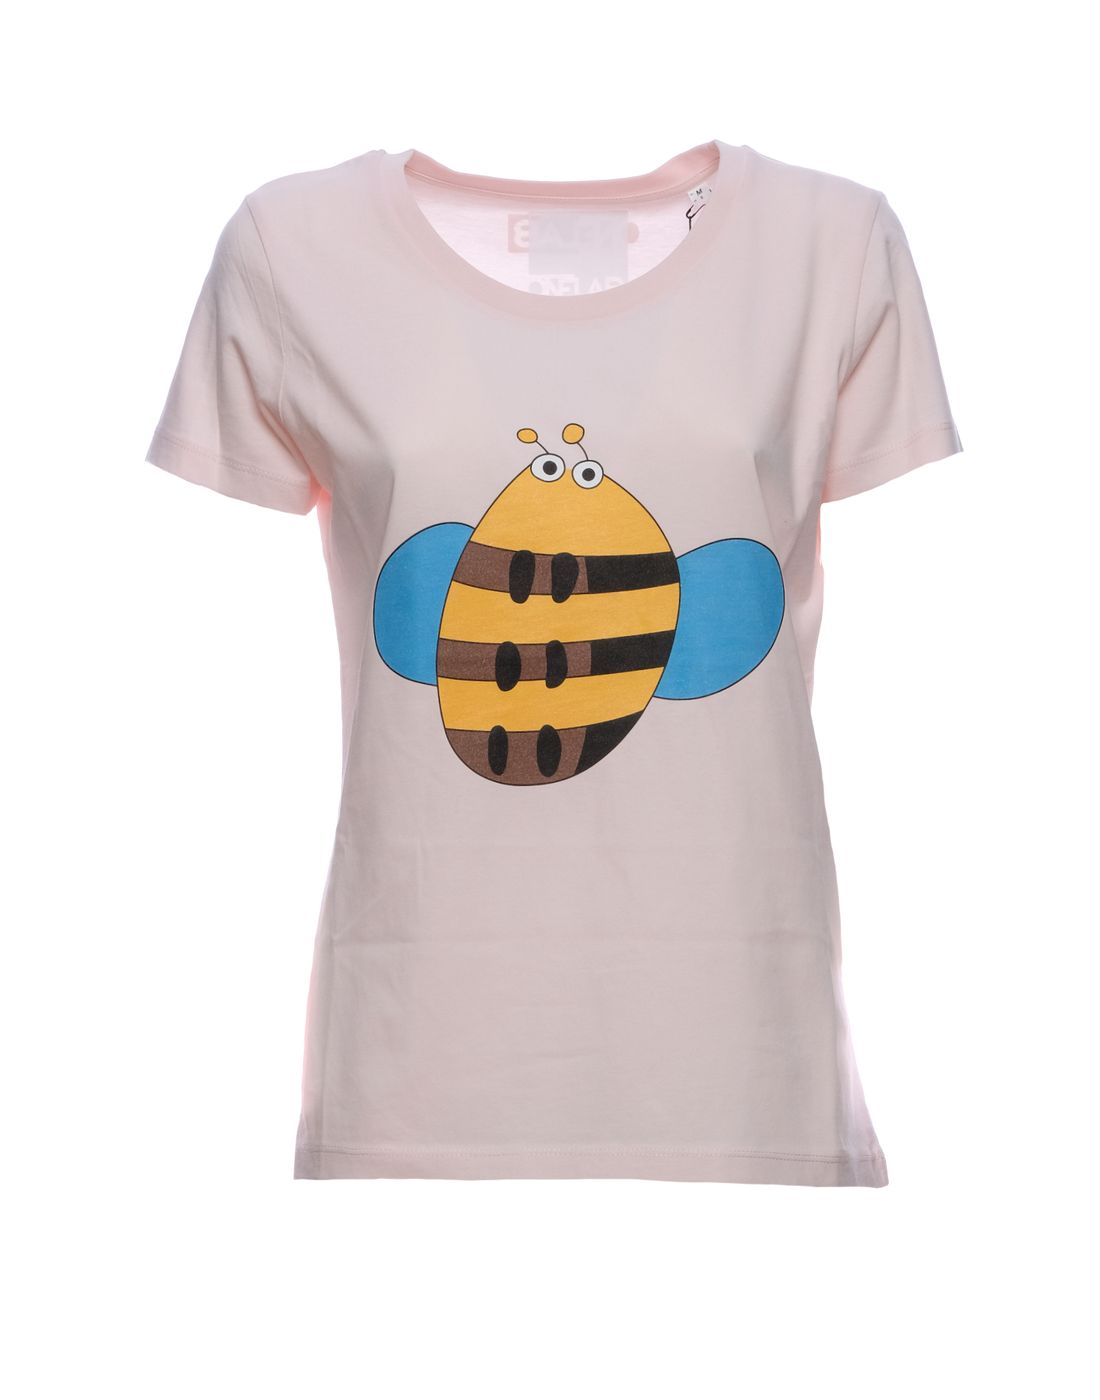 T-shirt da donna ONELAB Busy bee 005 pink